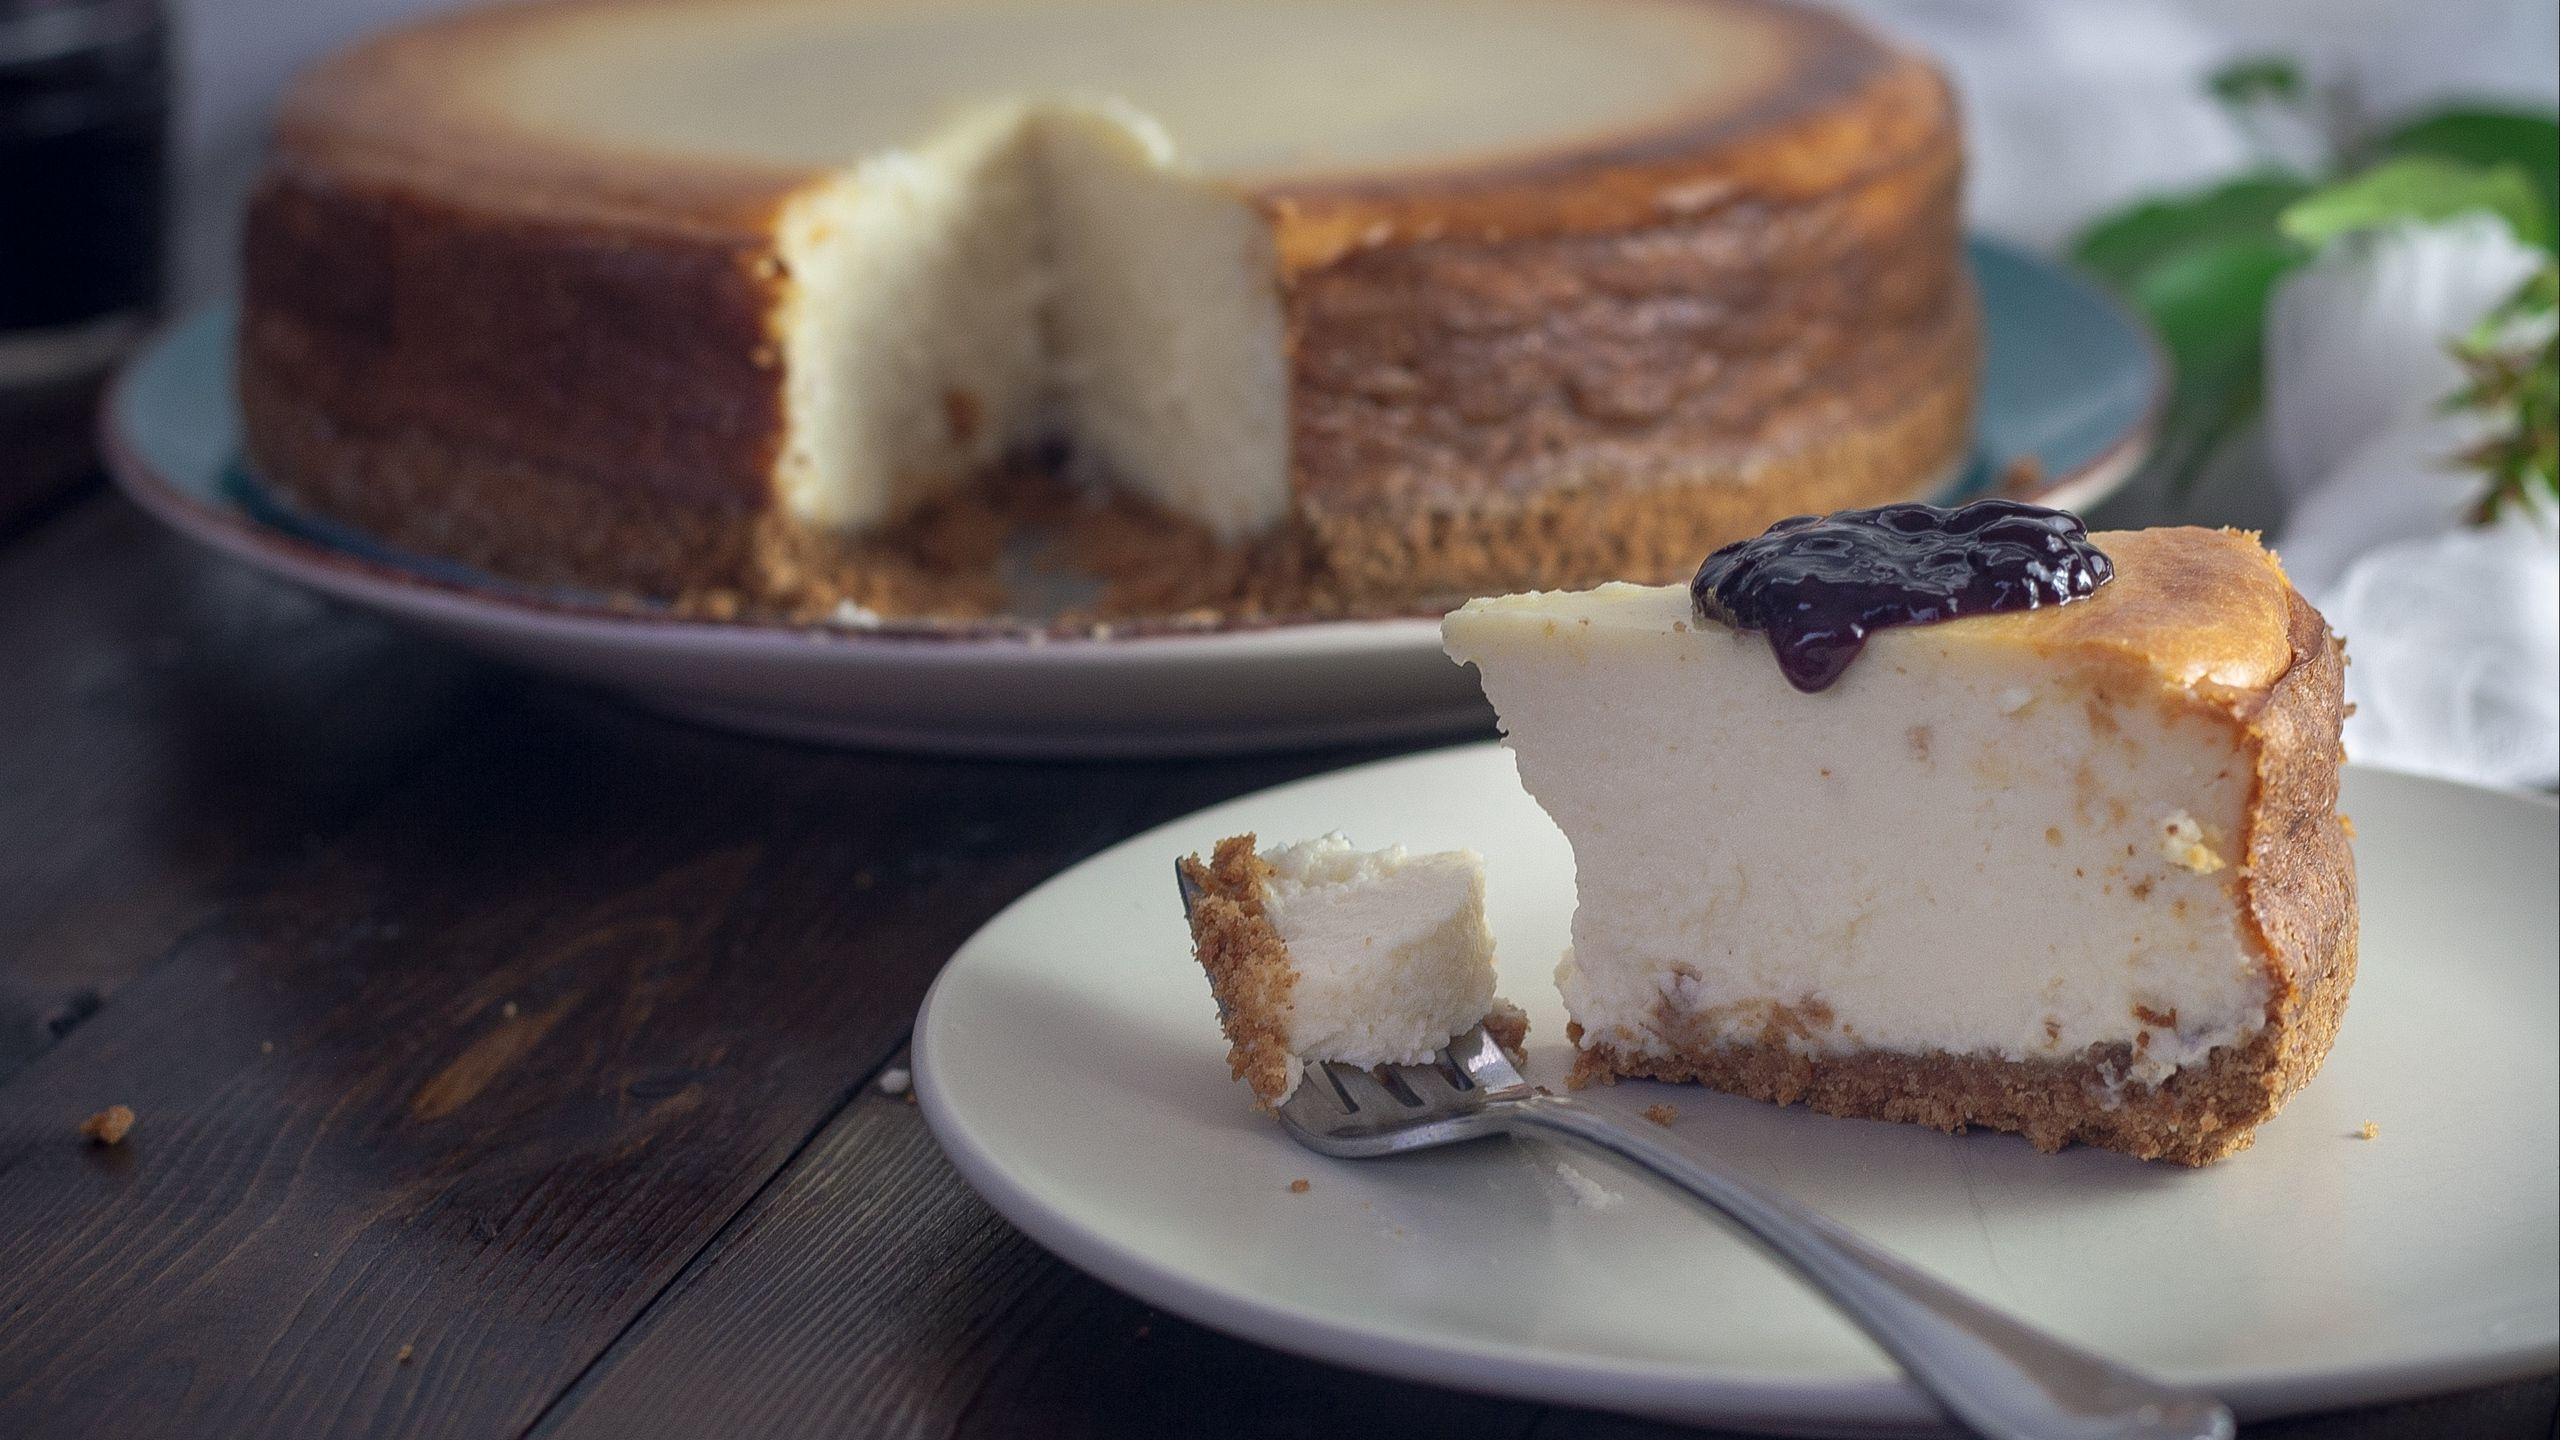 Download wallpaper 2560x1440 cheesecake, dessert, jam, cheese